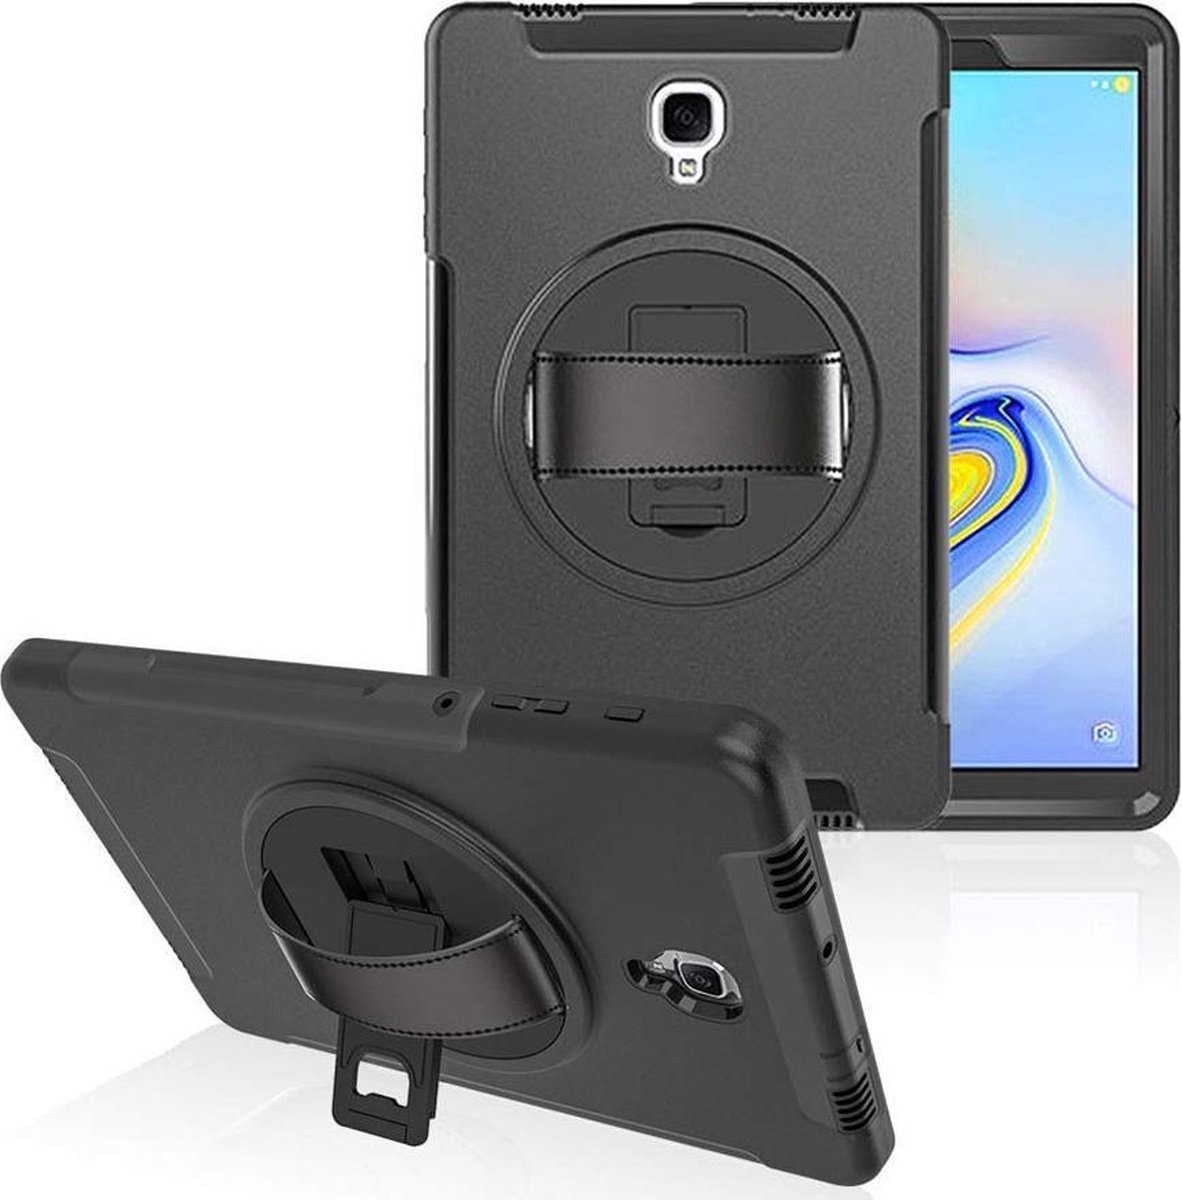 Samsung Galaxy Tab S5e Rugged Hoes met Handvat Grip - CaseBoutique - Valbestendig (Horeca, Retail, Hospitality & meer)